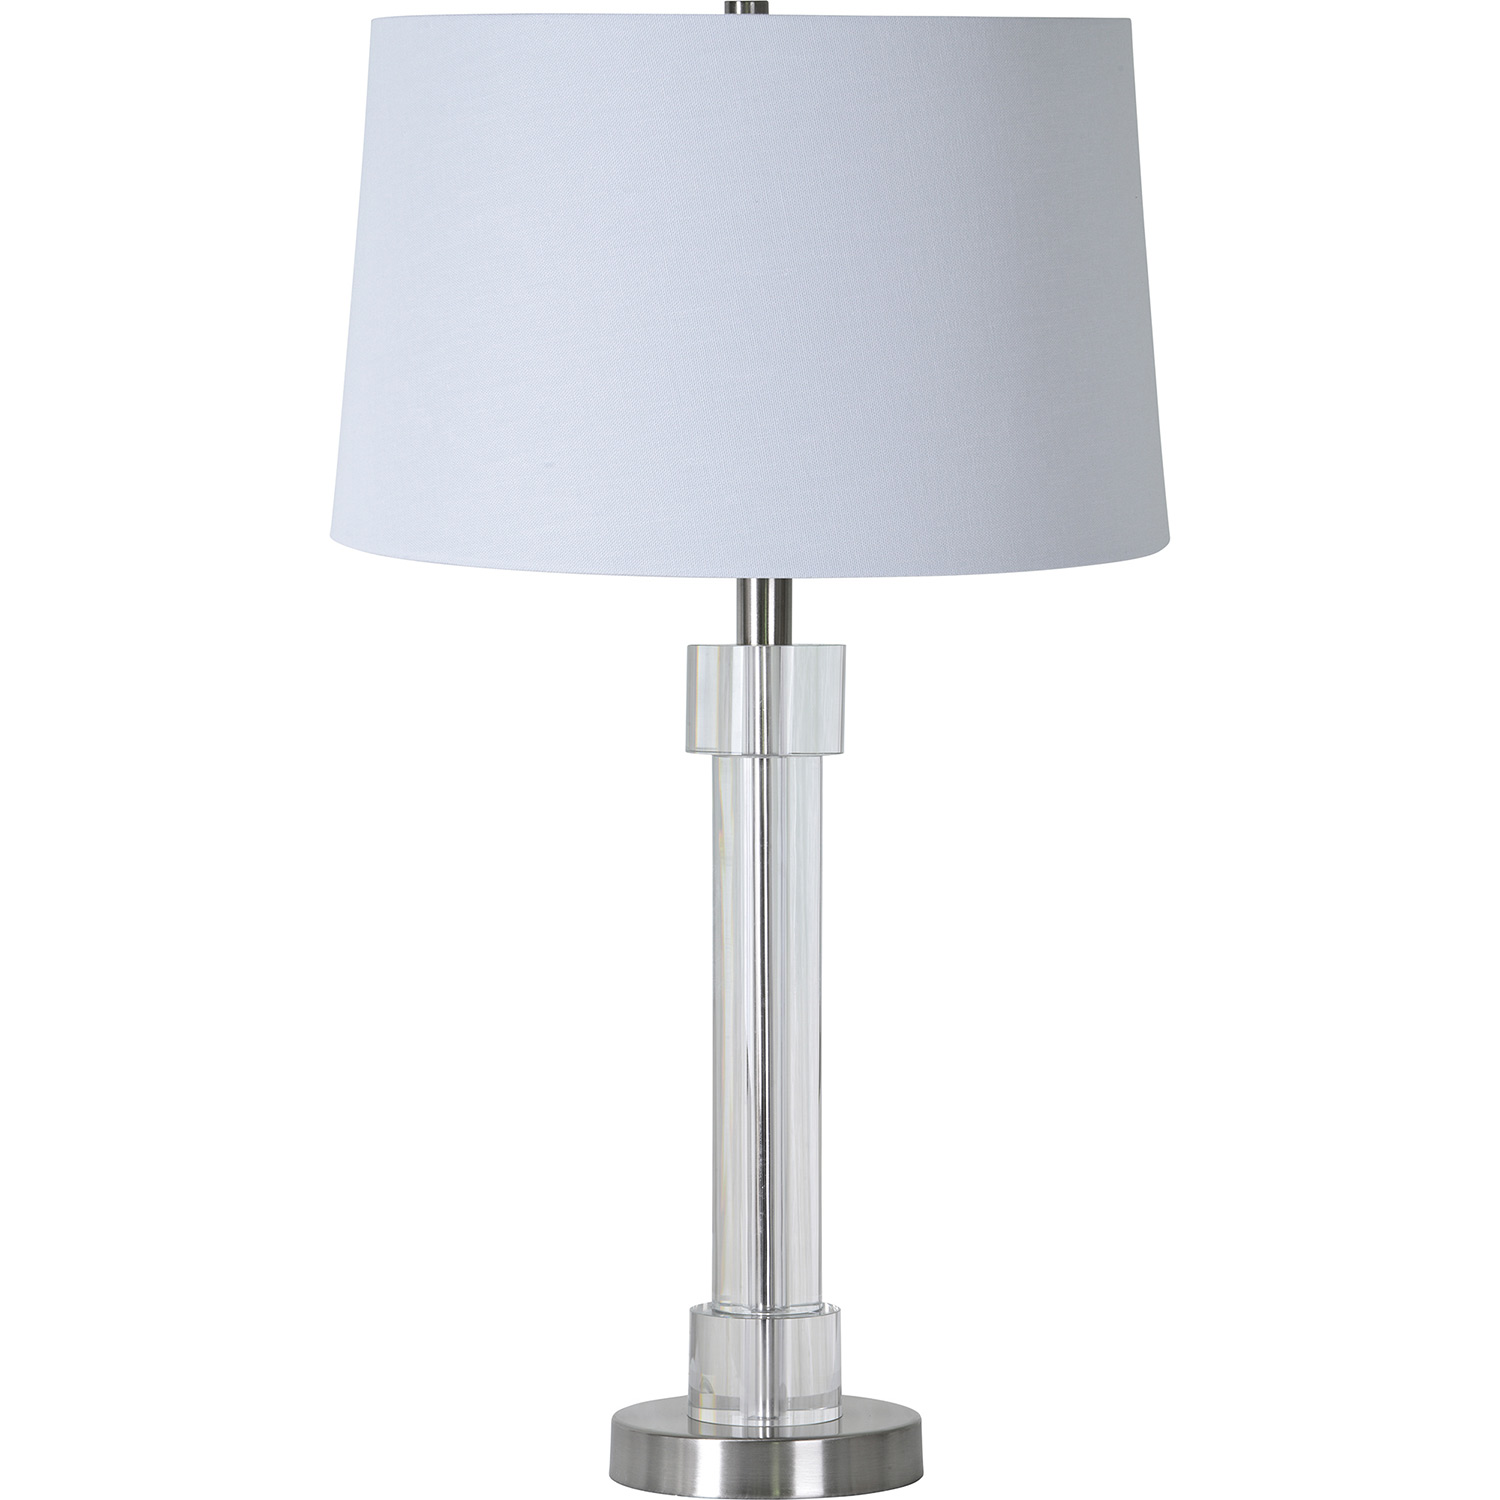 Ren-Wil Sealey Table Lamp - Brushed Nickel